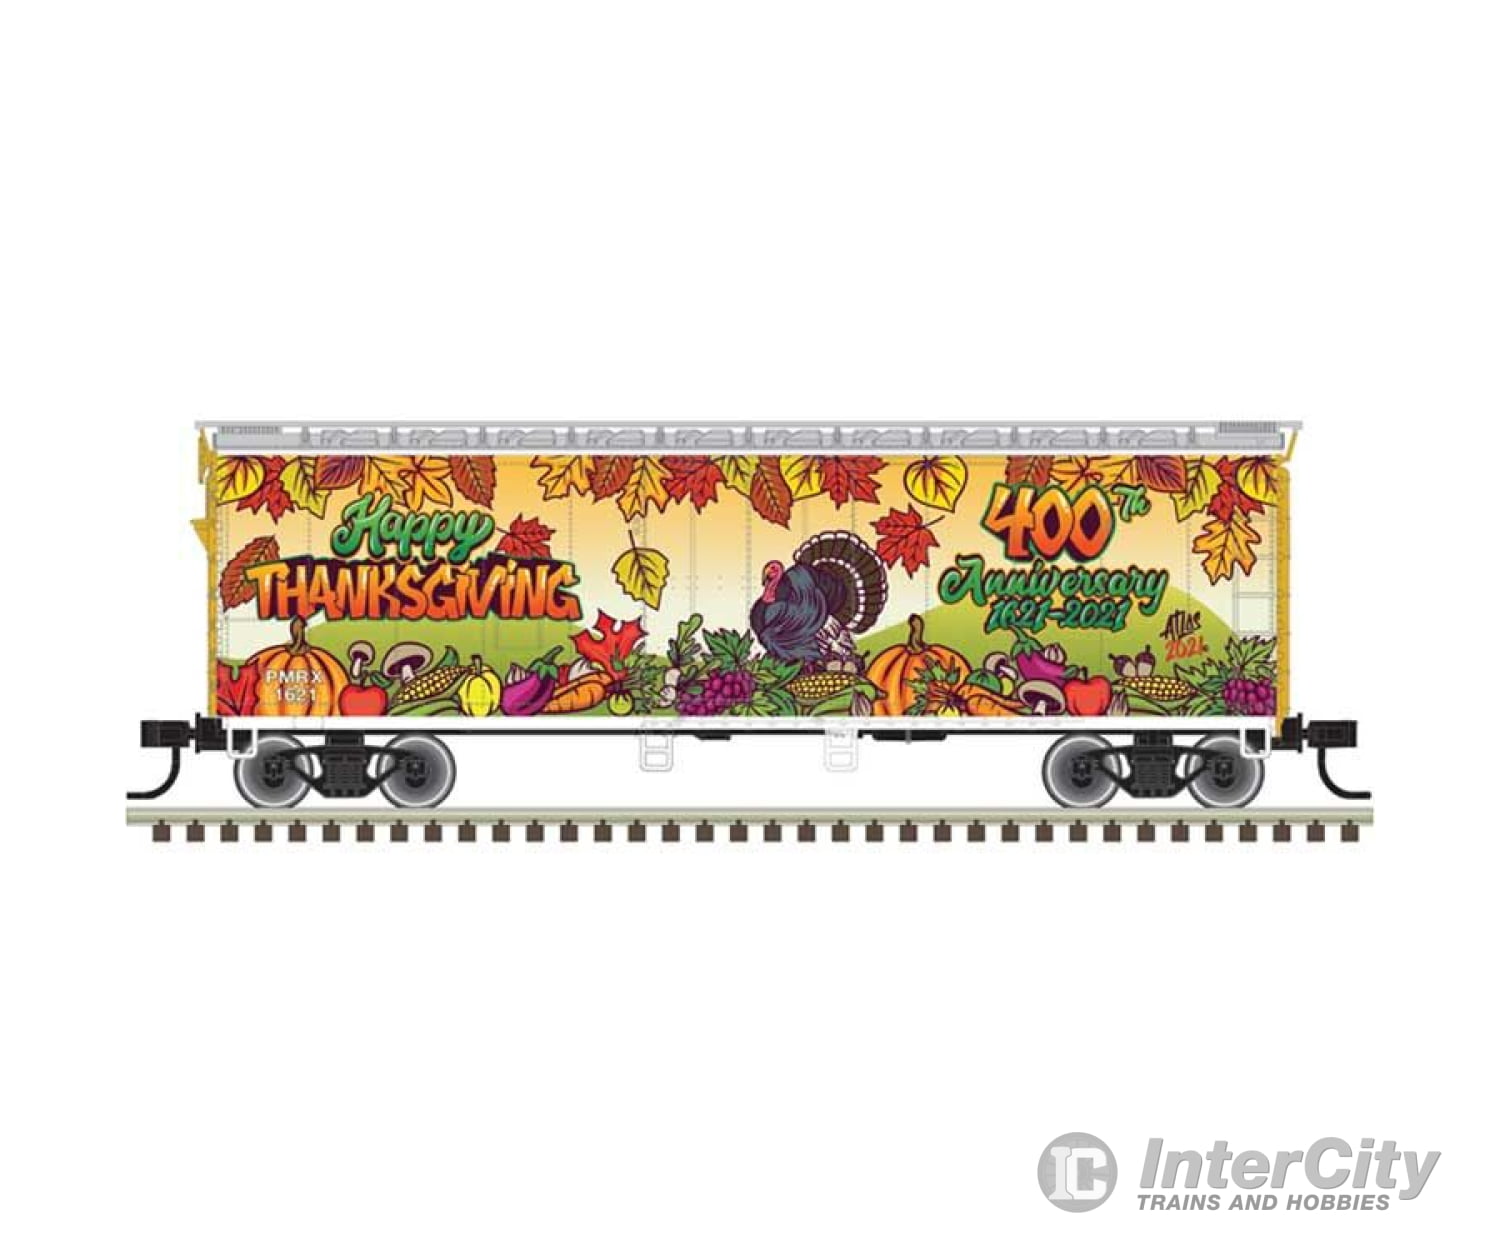 Atlas Trainman N 50006042 40 Plug-Door Boxcar - Ready To Run Trainman(R) -- Happy Thanksgiving Prlx